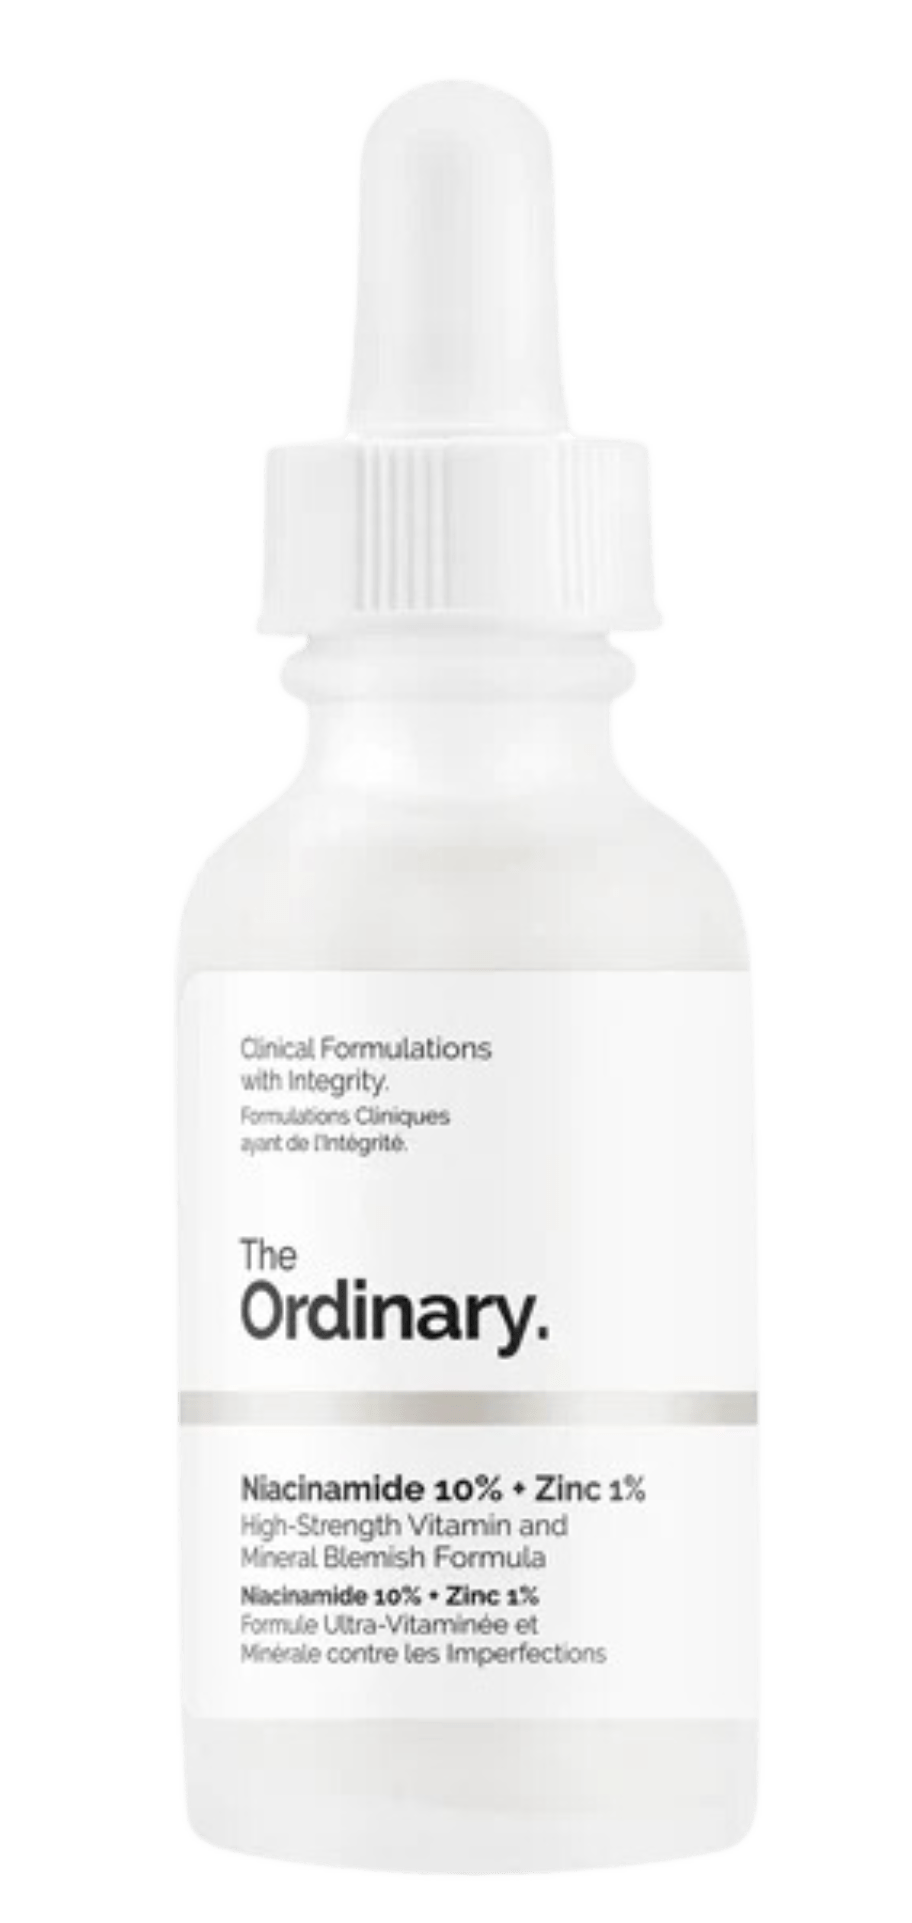 The Ordinary Hyaluronic Acid 2% + B5 – 30ml